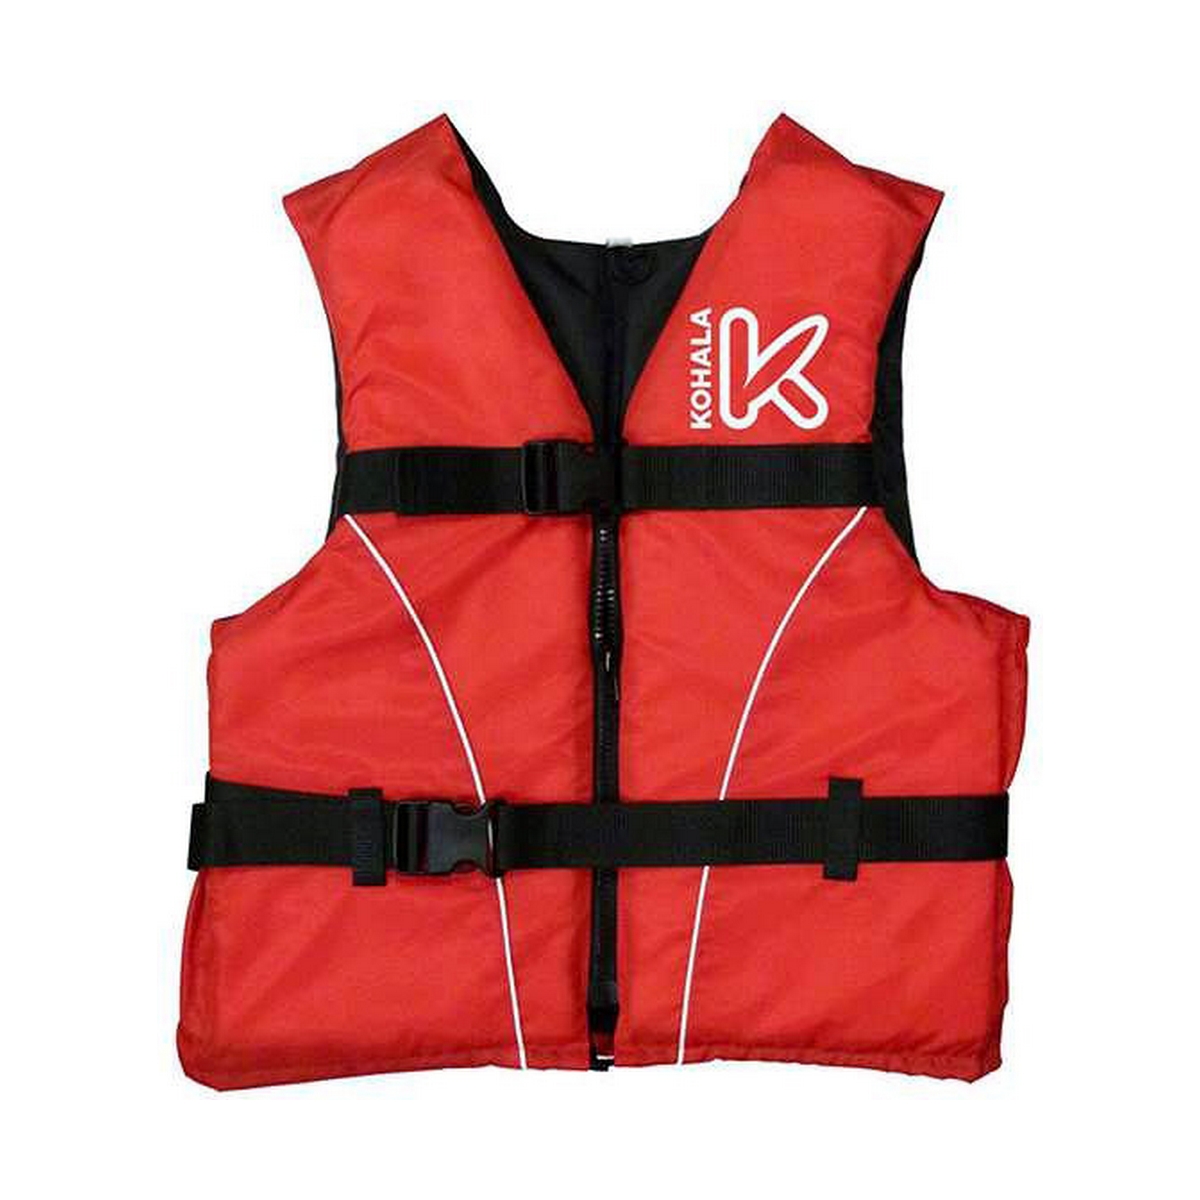 Lifejacket Kohala Life Jacket